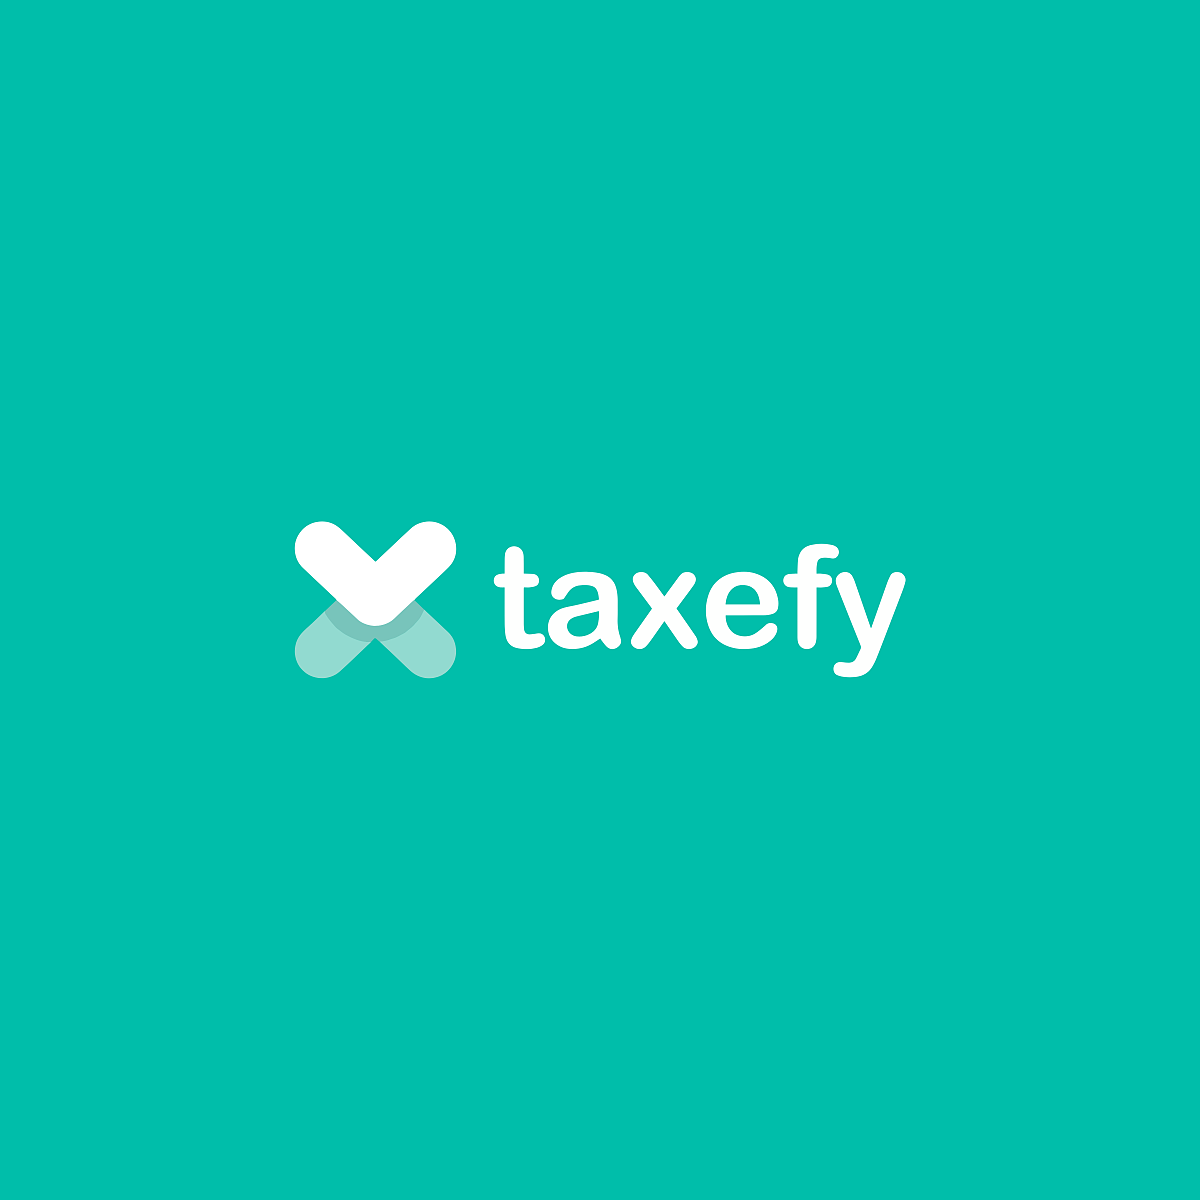 Taxefy_Logo (für türkisen Hintergrund)